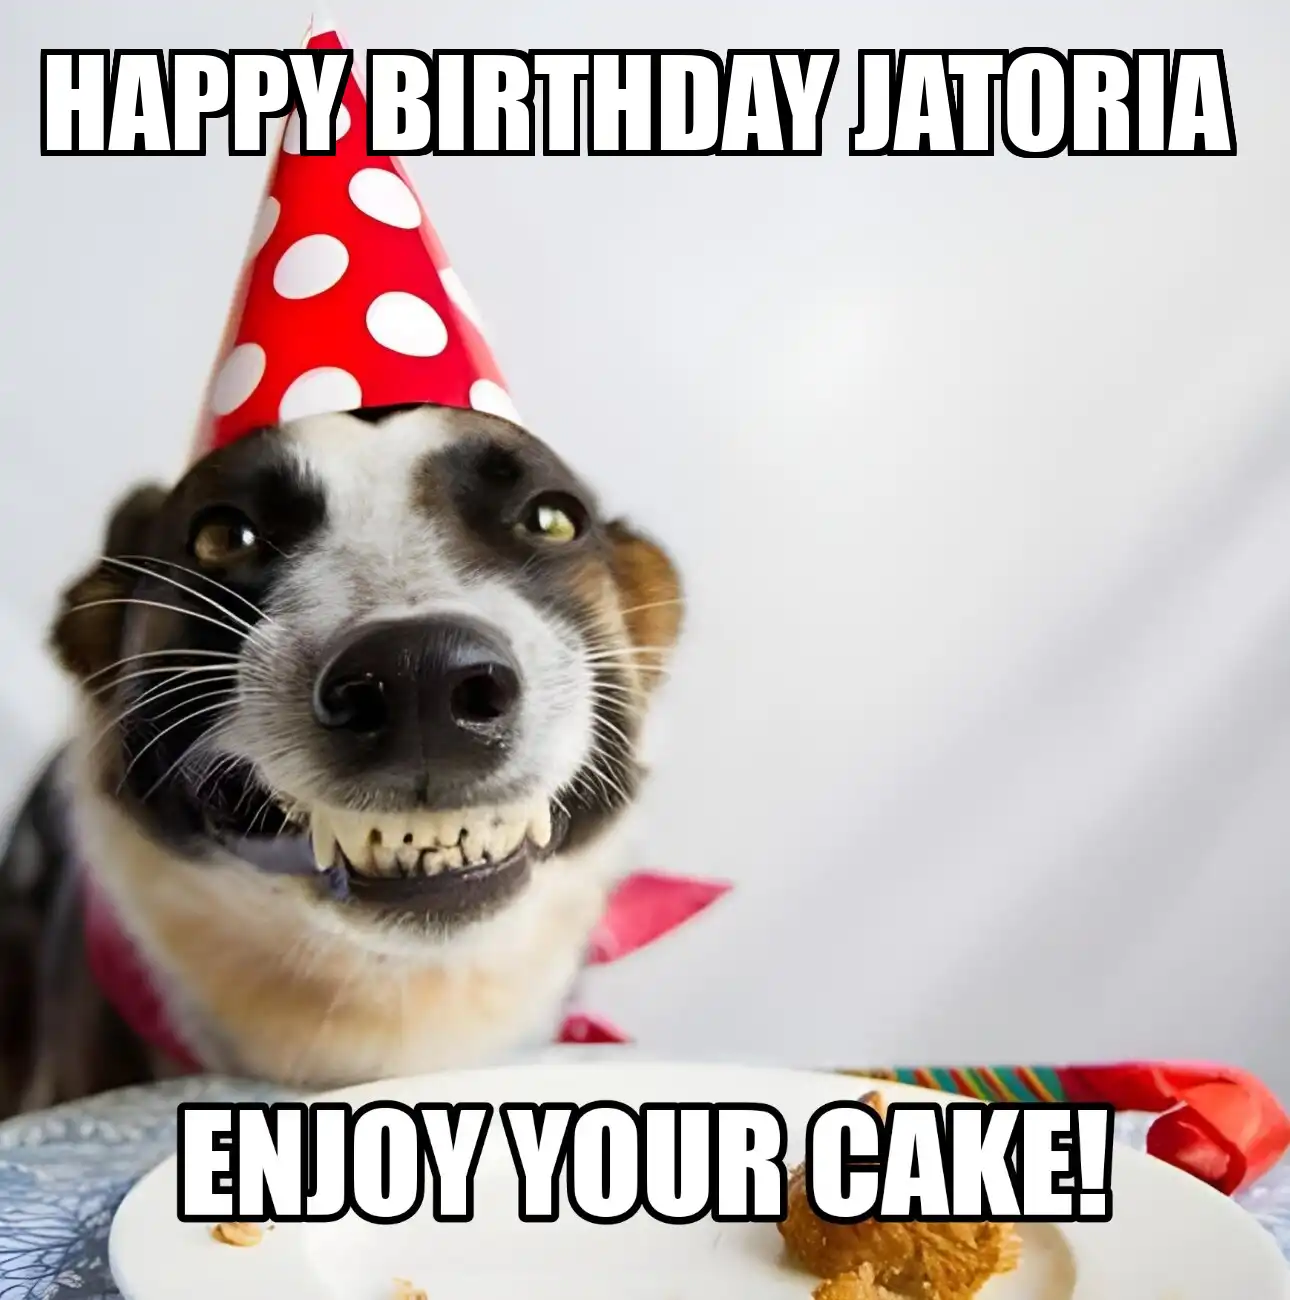 Happy Birthday Jatoria Enjoy Your Cake Dog Meme